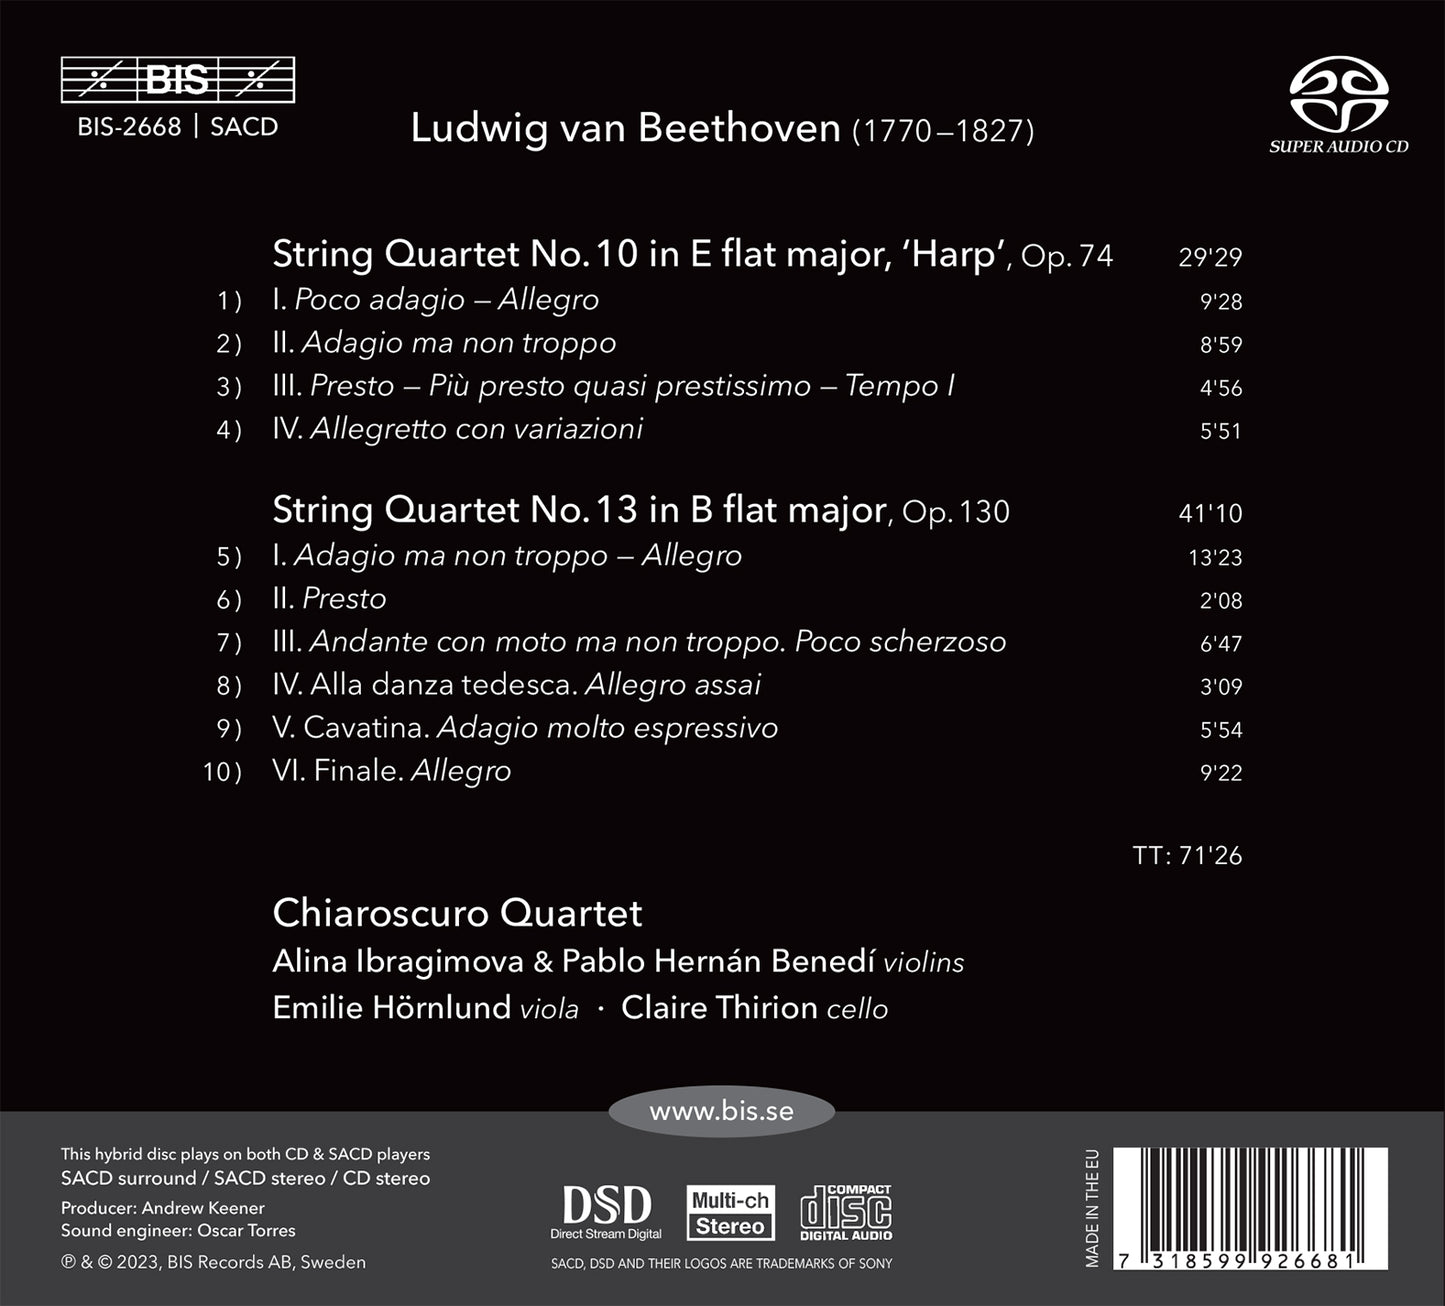 Beethoven: String Quartets, Op. 74 & 130 / Chiaroscuro Quartet